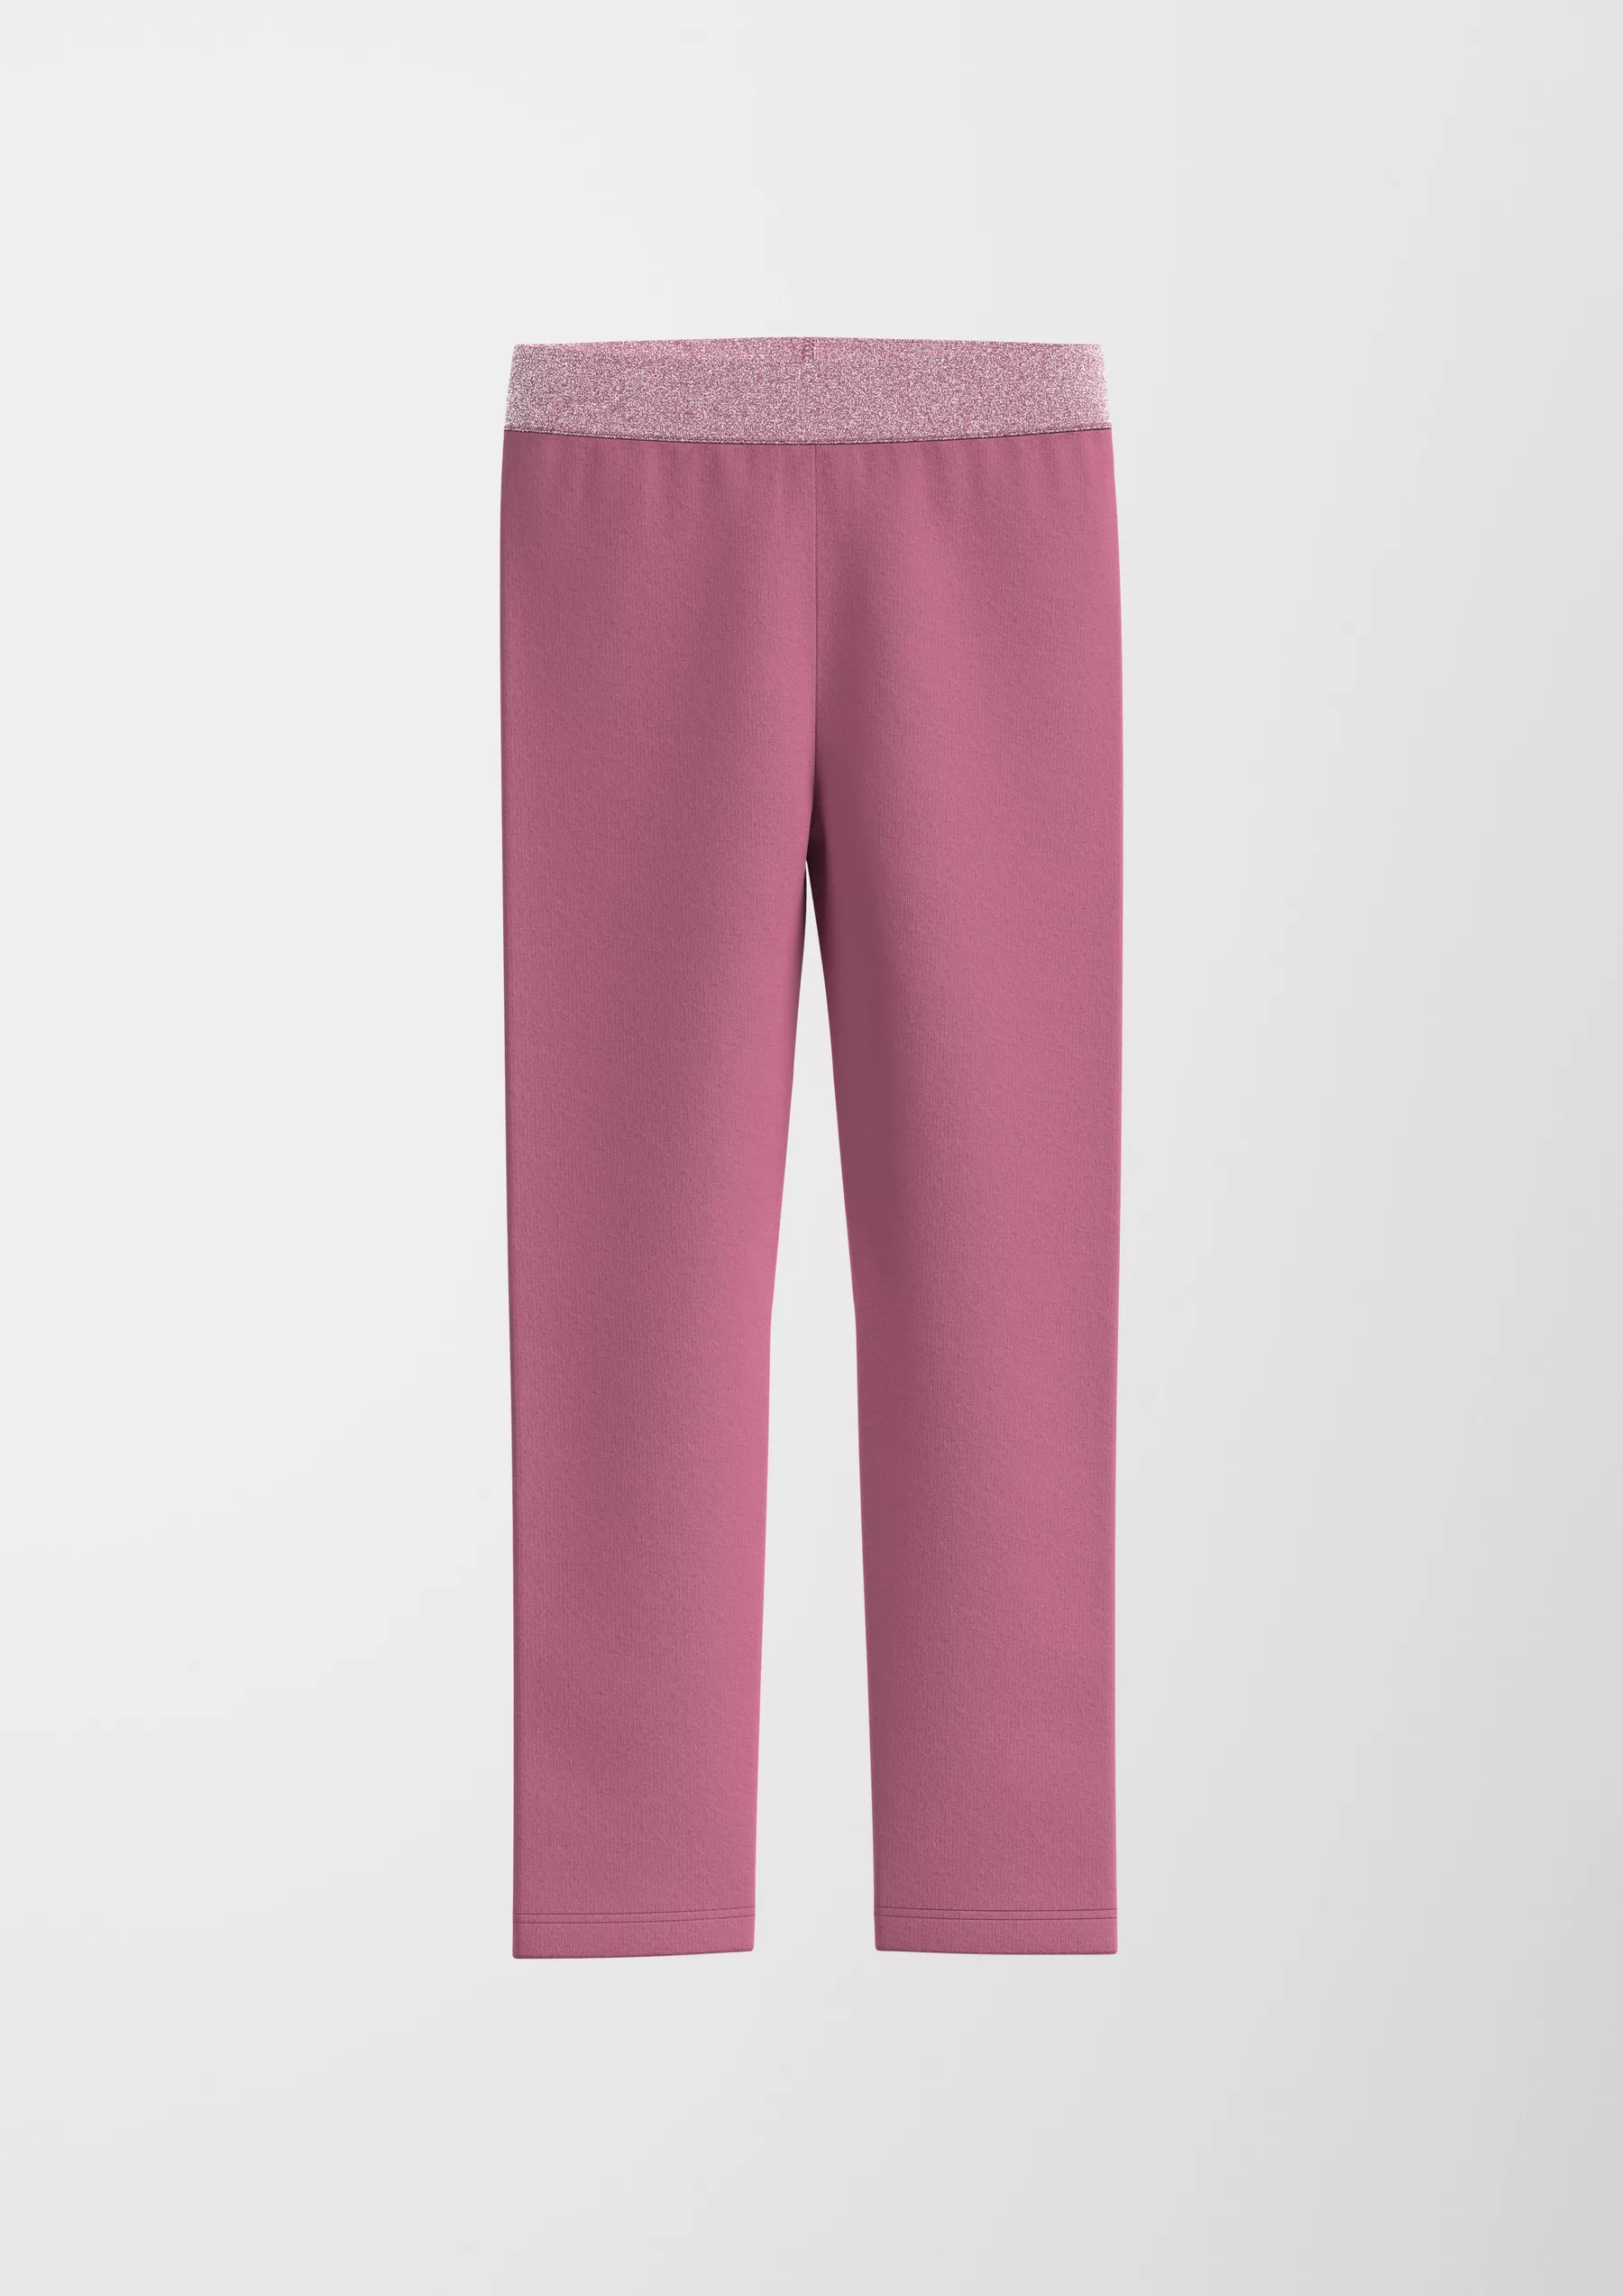 Лосины QS by s. Oliver для девочек, размер 110, розовый, 2133919 лосины soft cover beself розовый